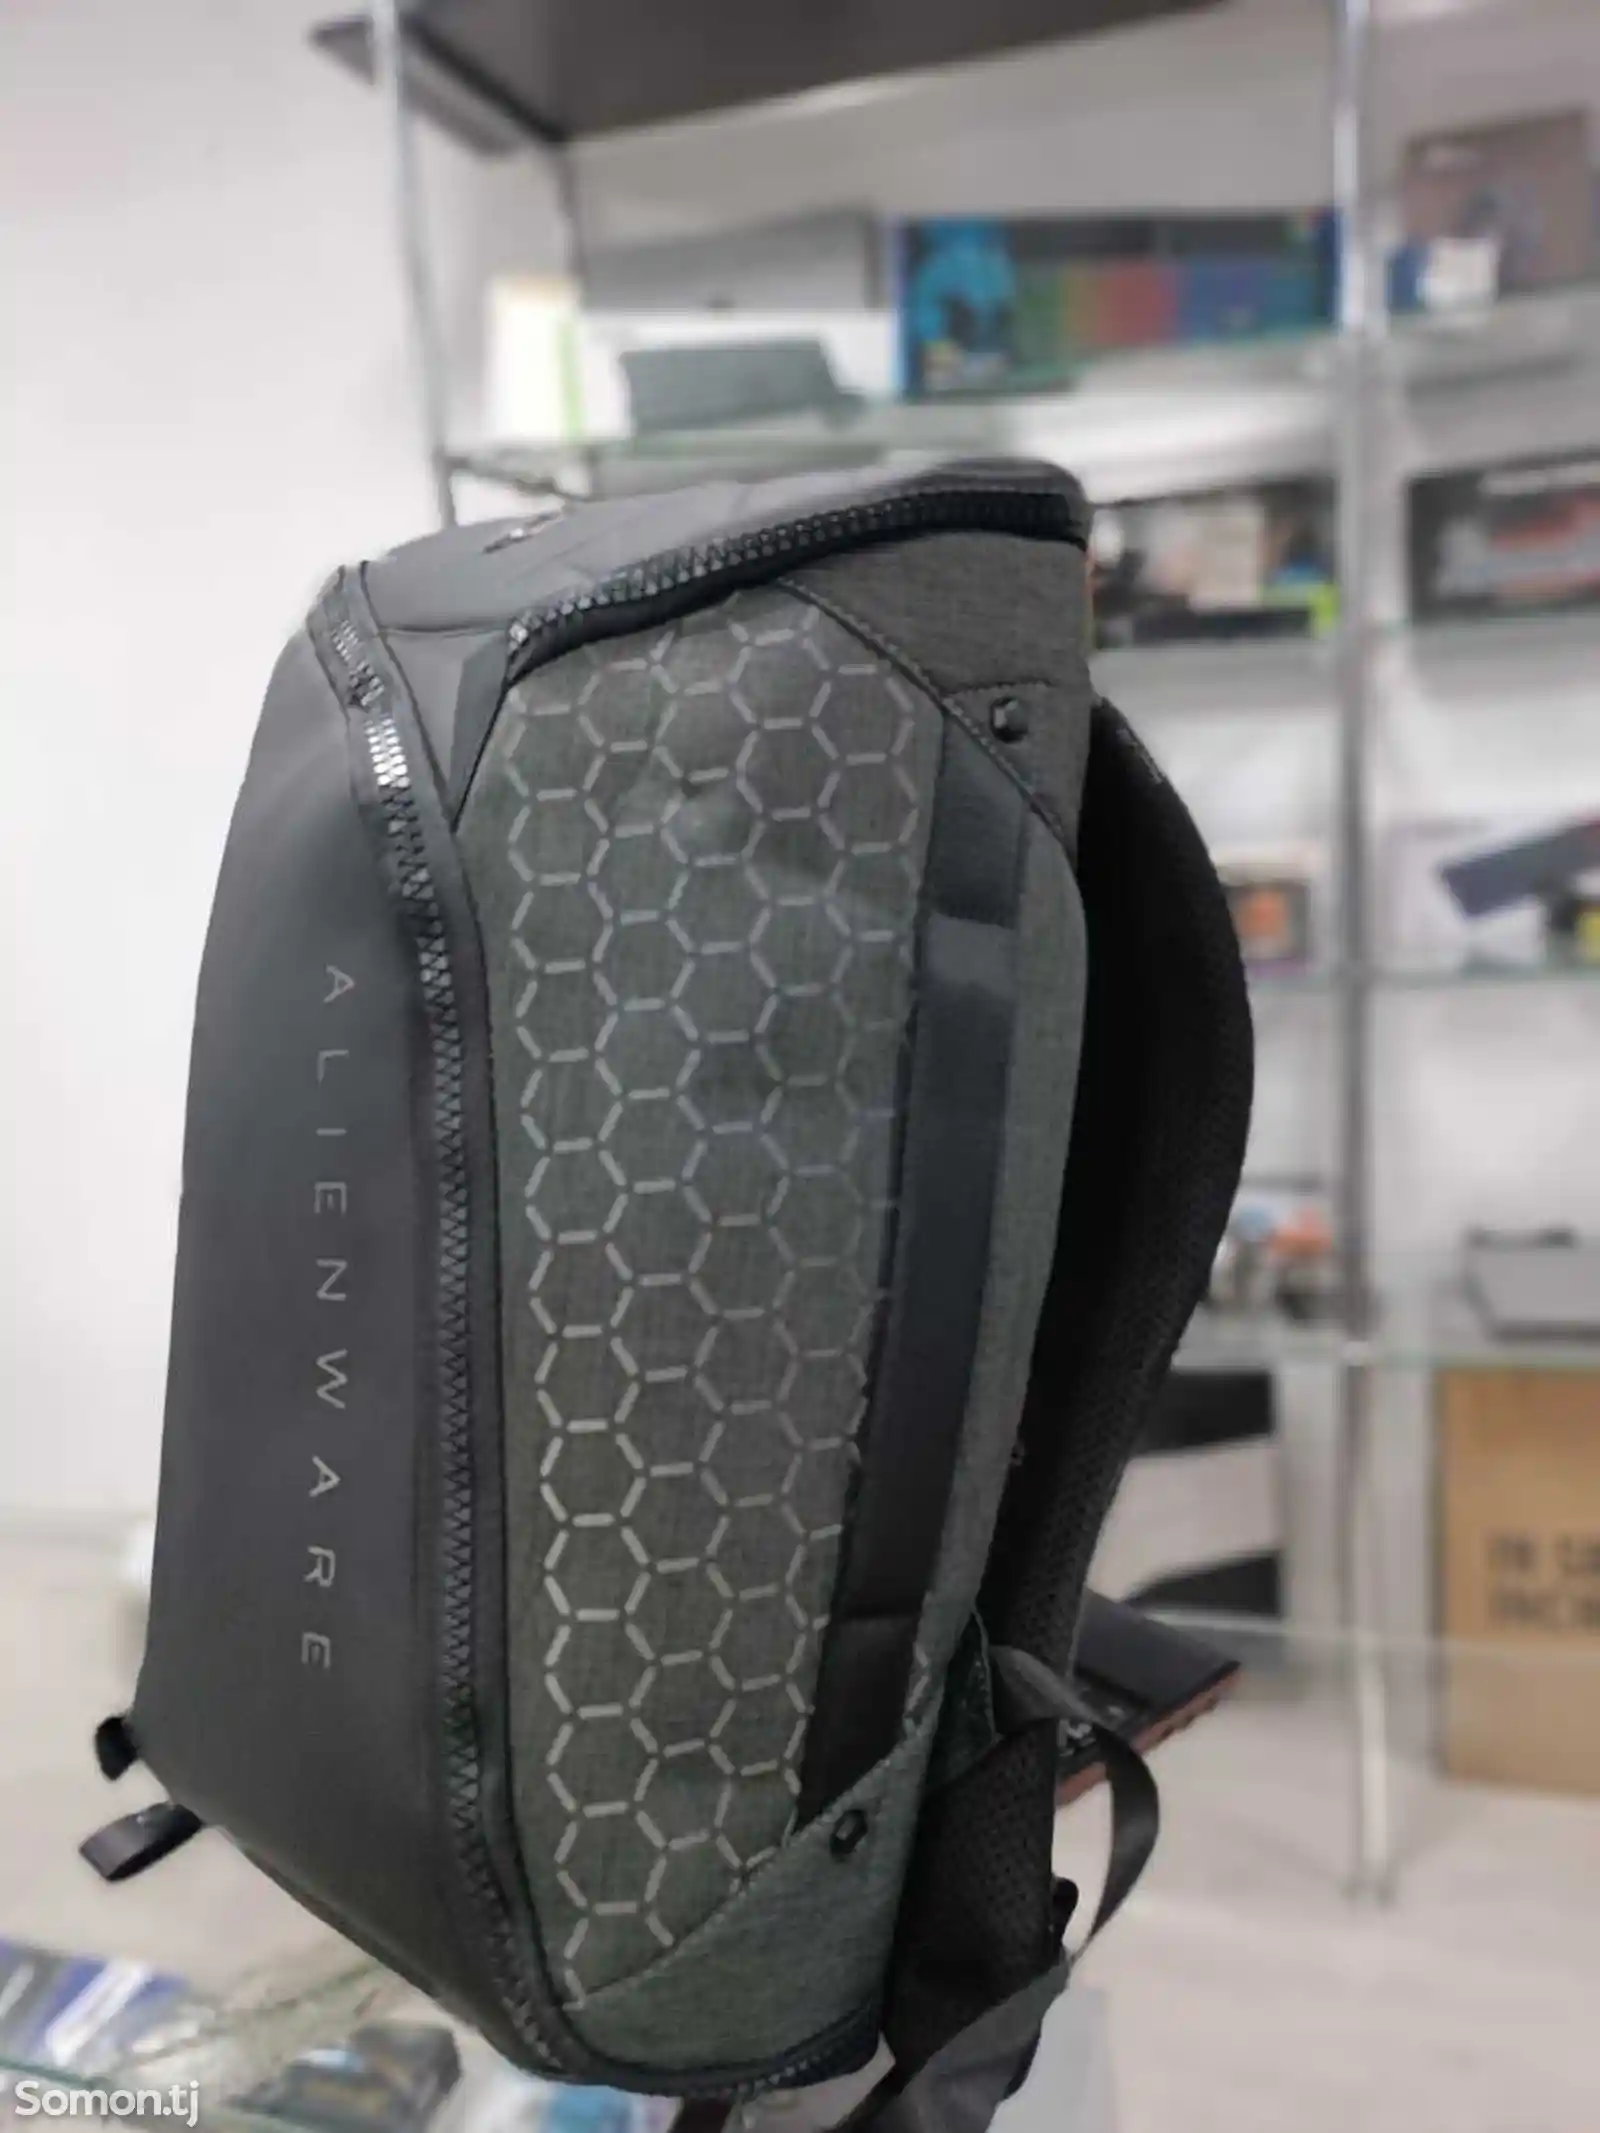 Рюкзак для ноутбука AlienWare Pro-3